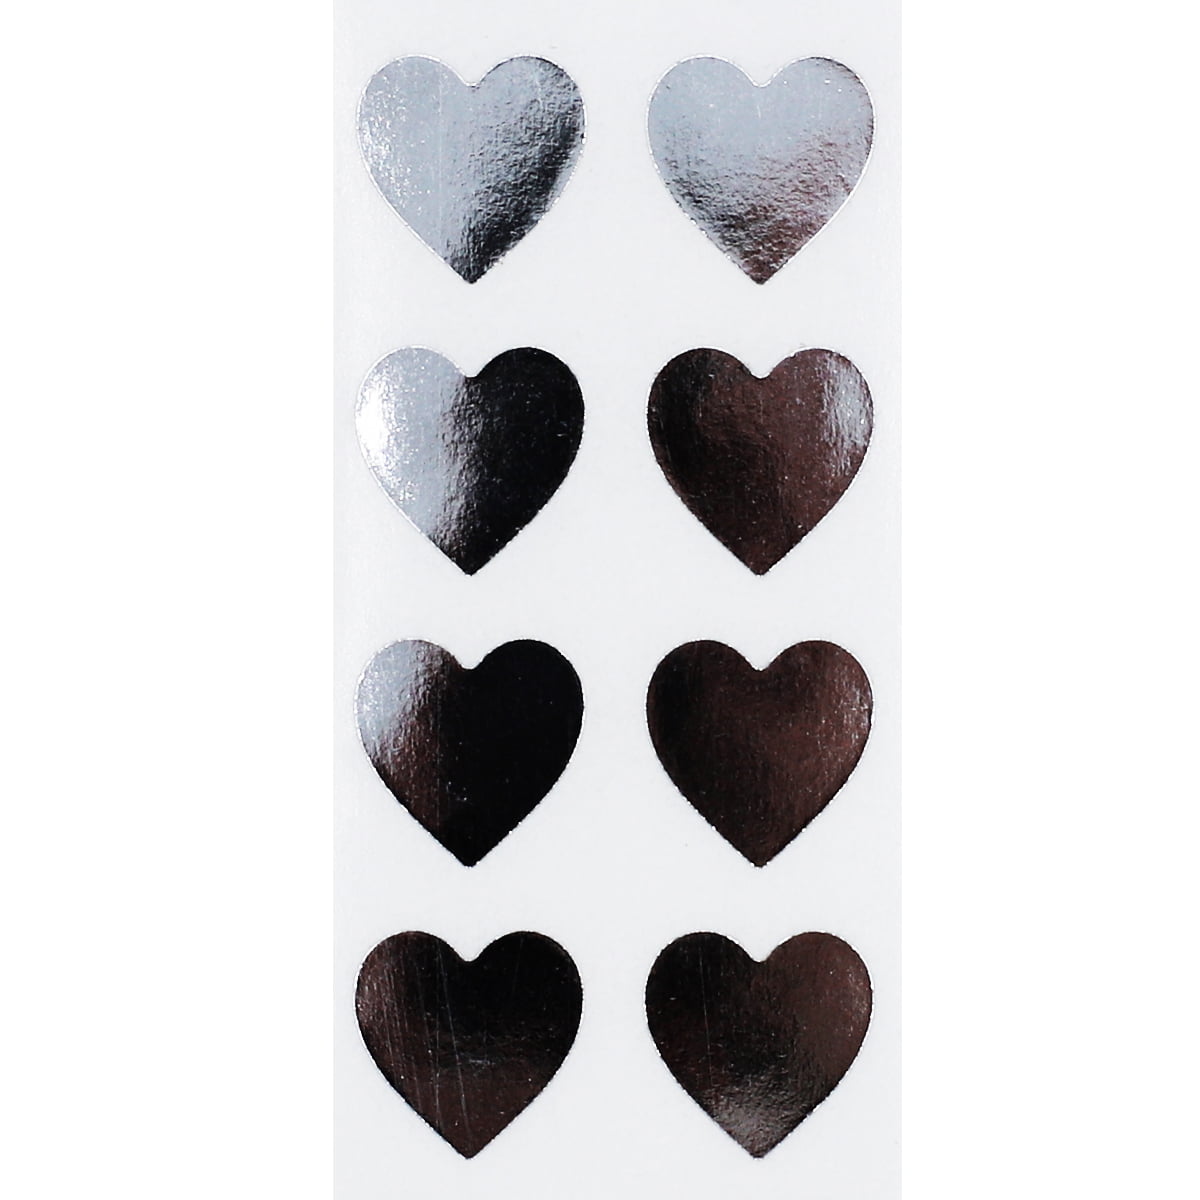 Loving Red Heart Sticker for Sale by allstars007